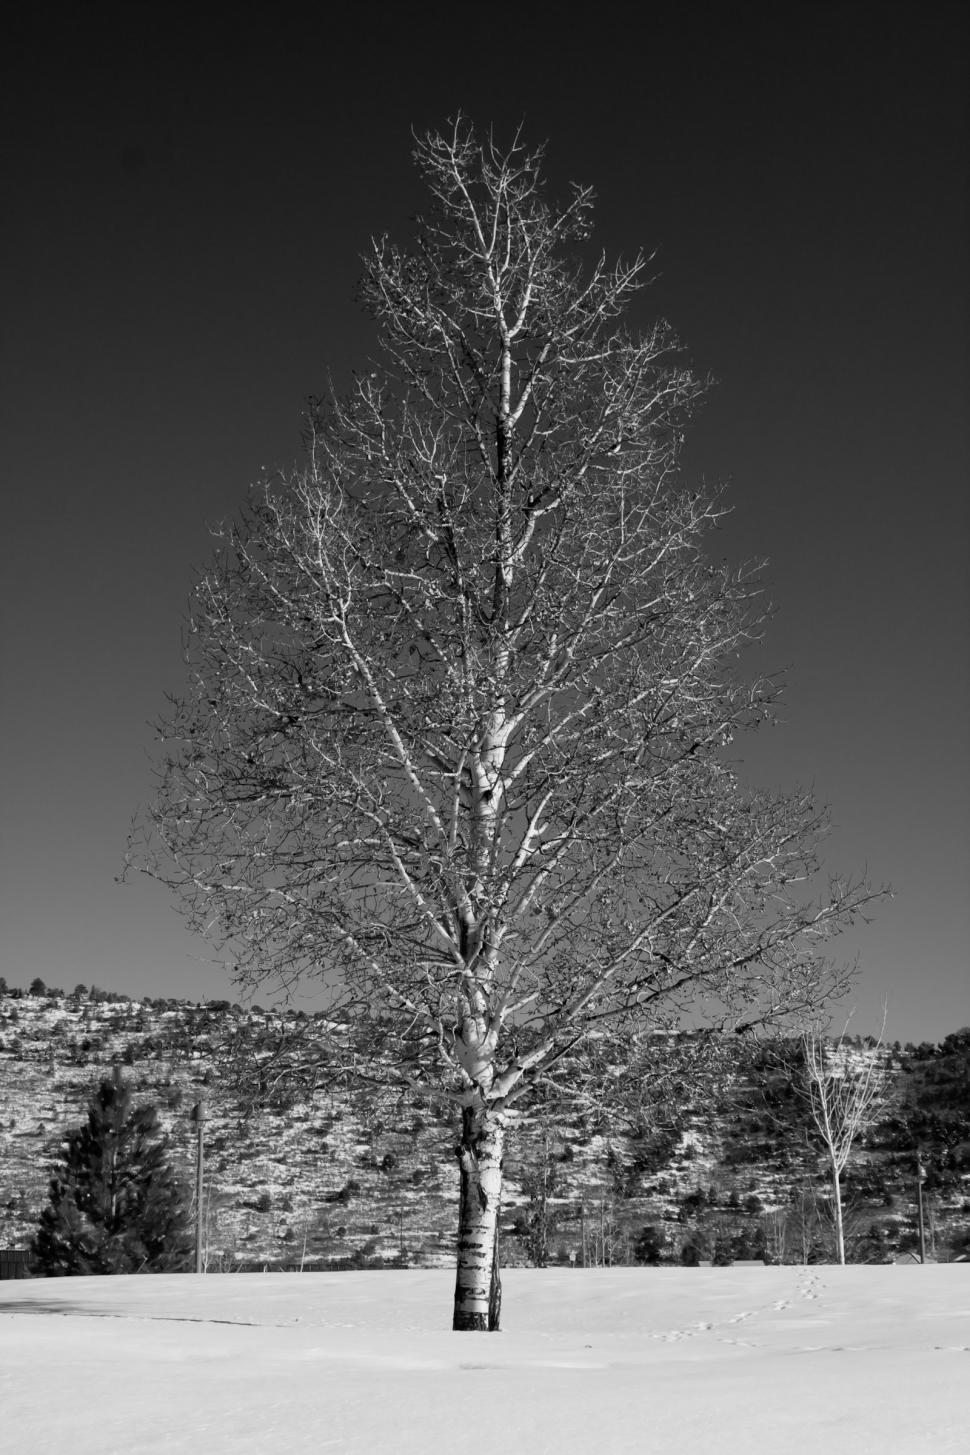 Free Image of Winter Tree 